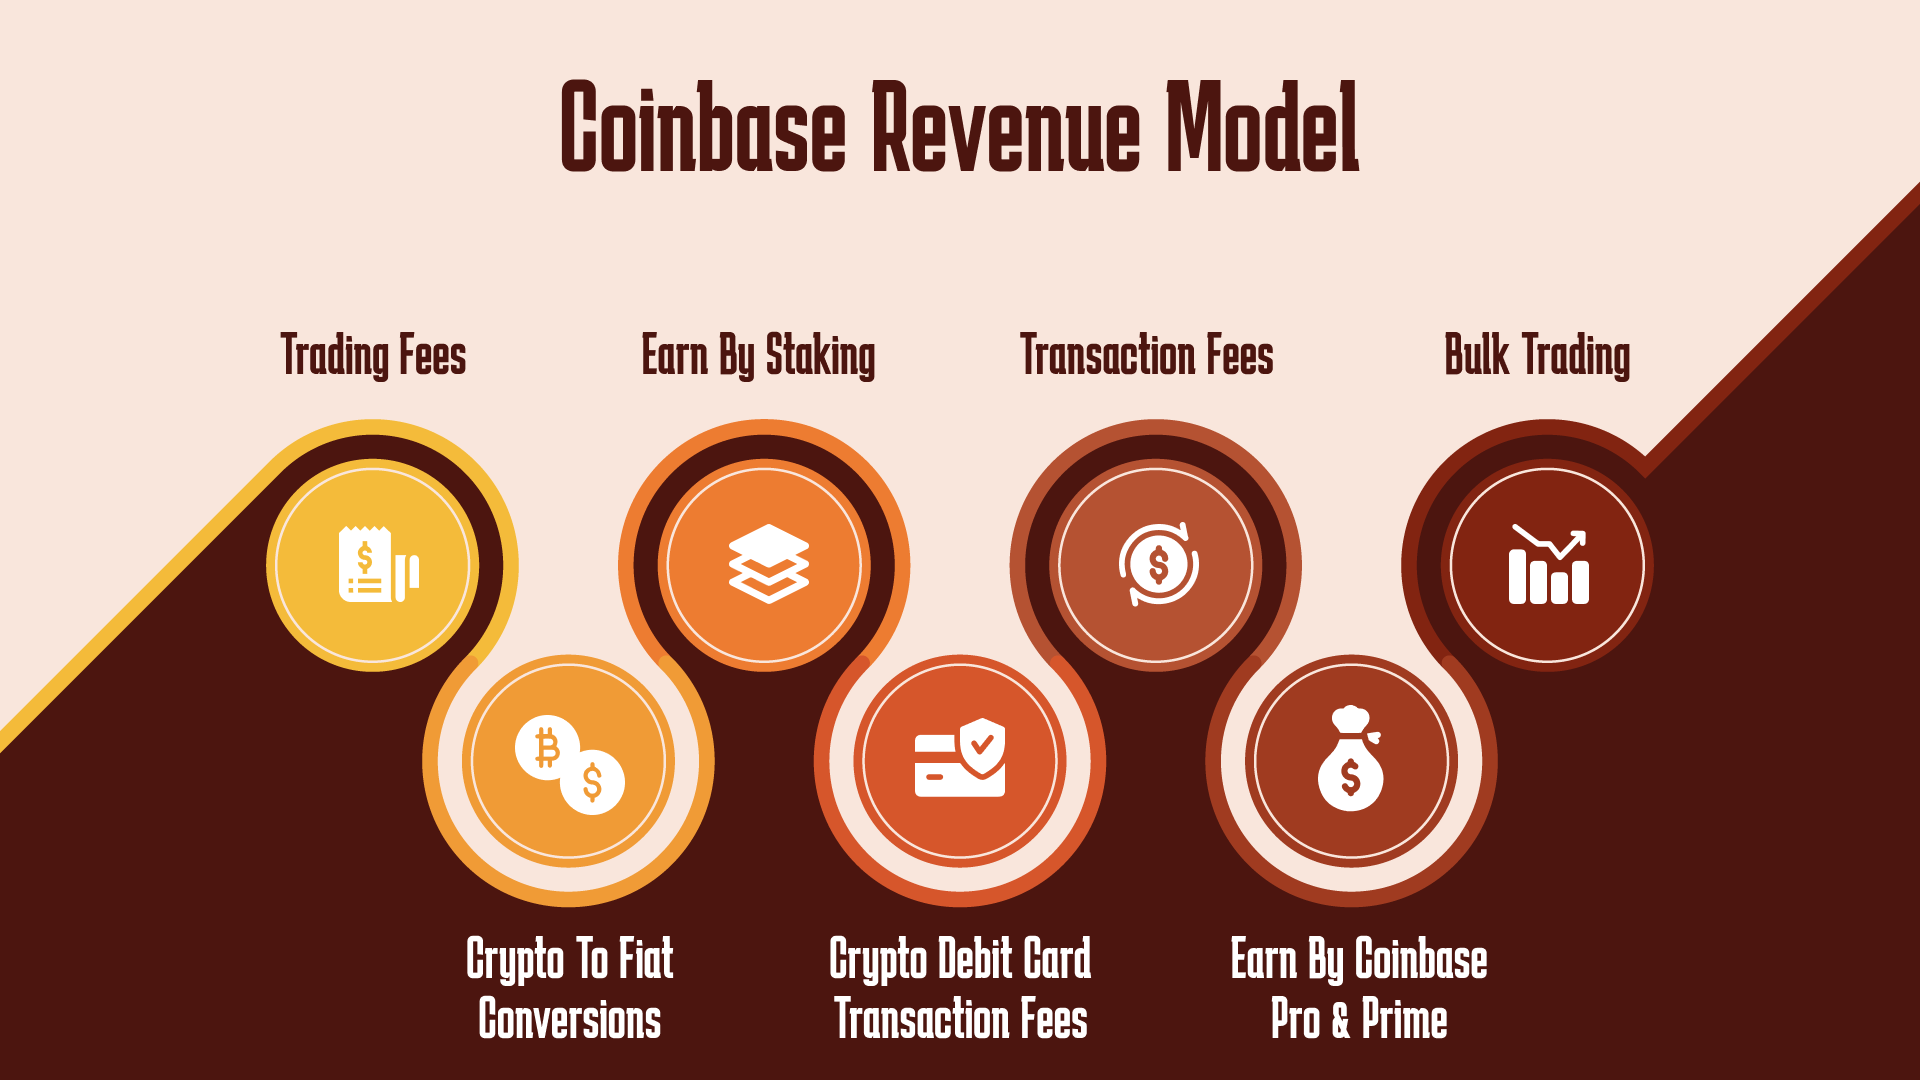 Coinbase revenue model